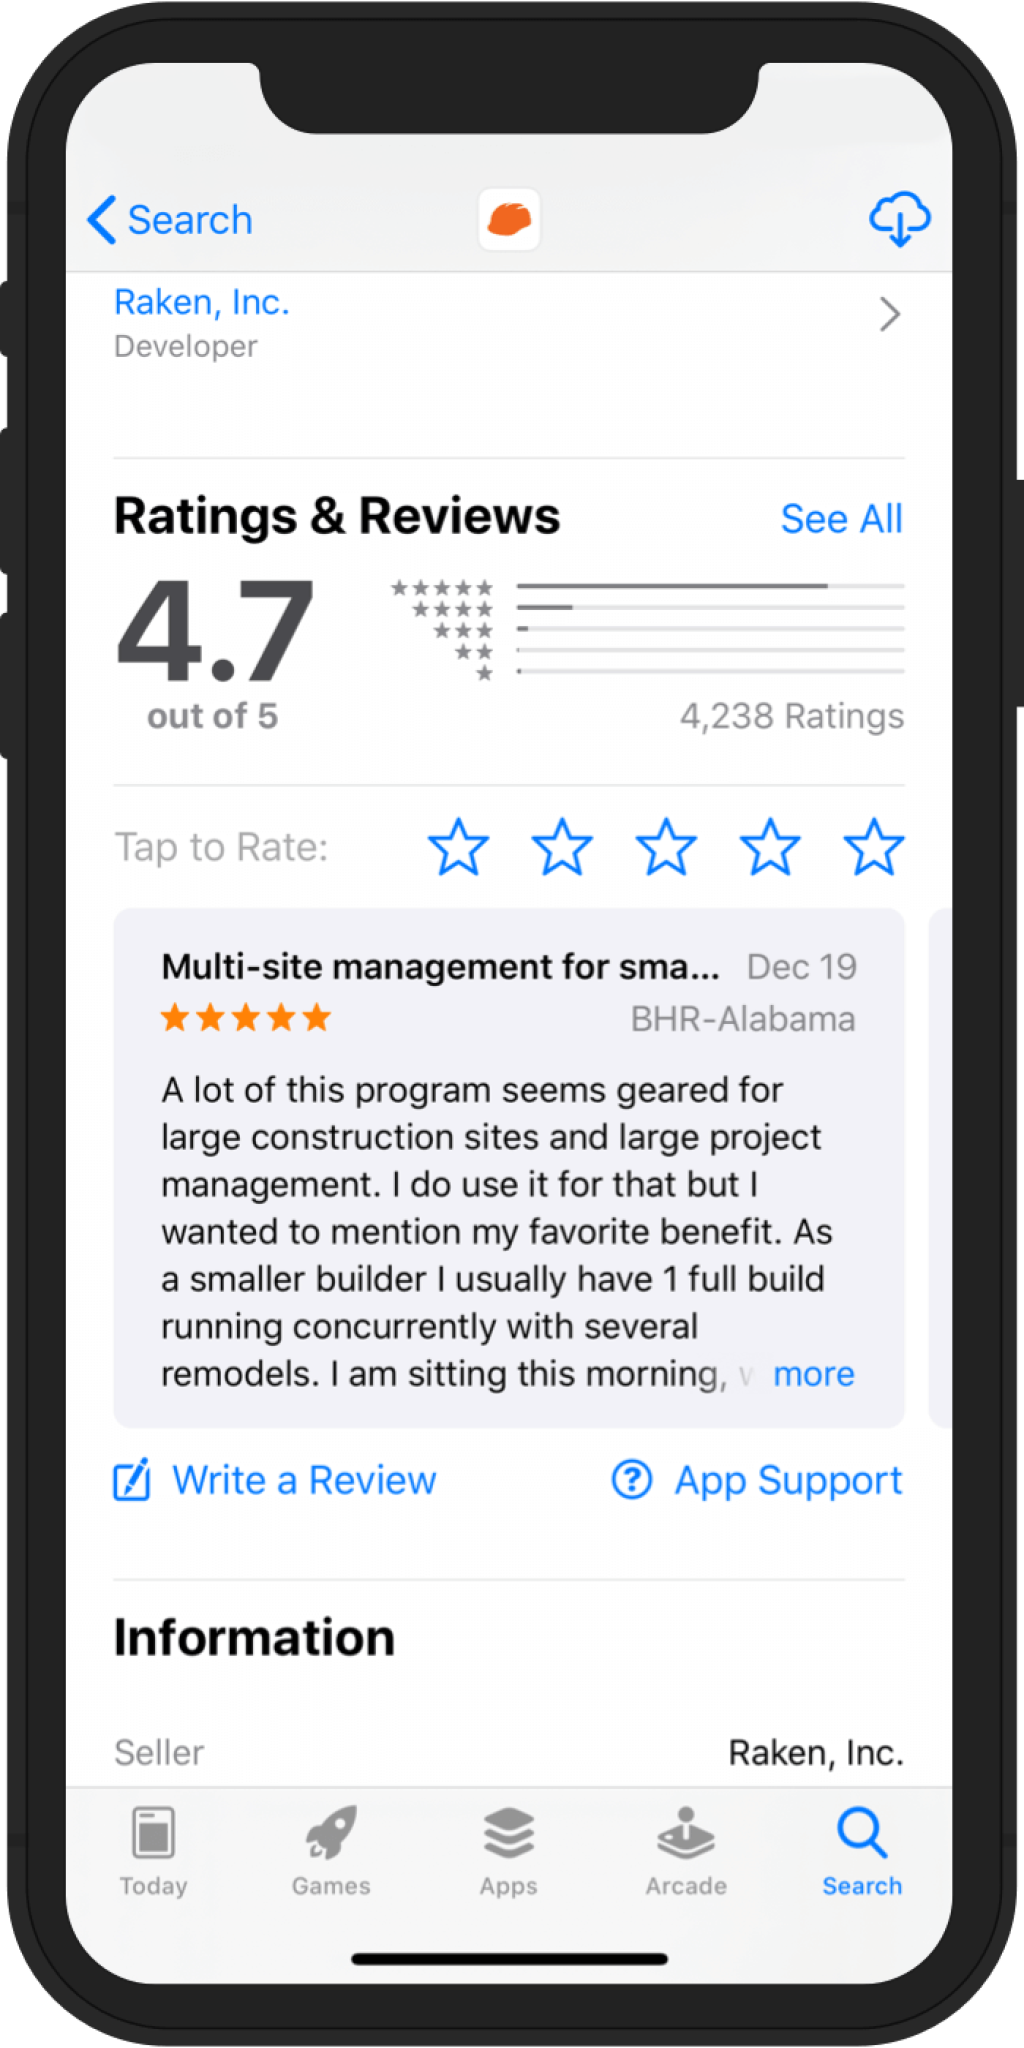 Raken's construction app reviews and ratings in App Store.